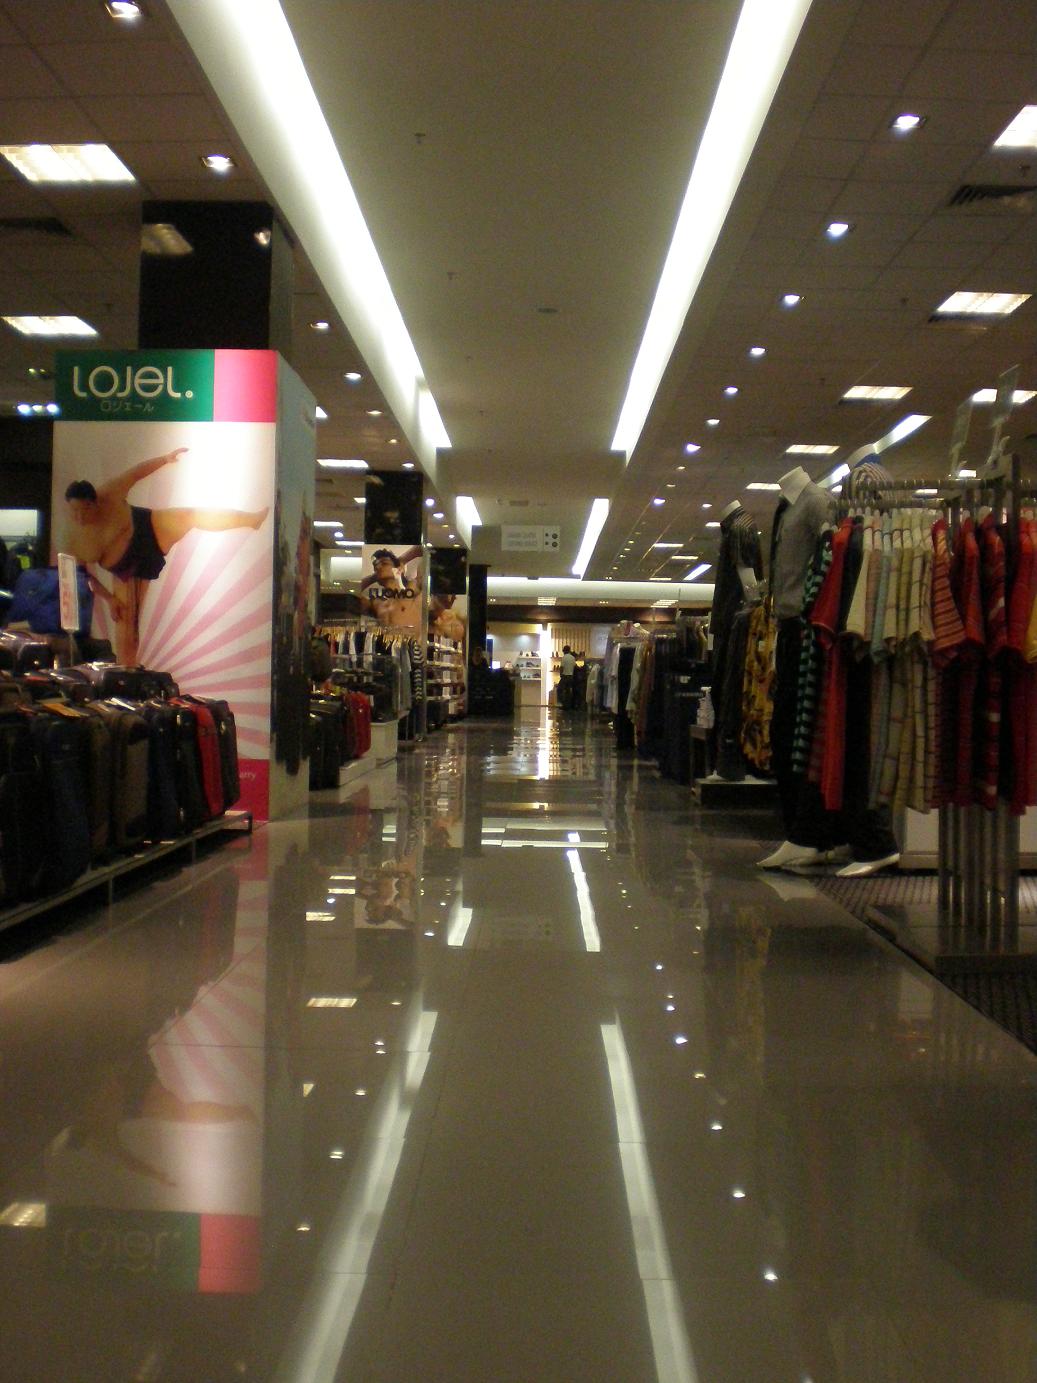 *The KUANTAN blog*: A leisurely stroll around East Coast Mall